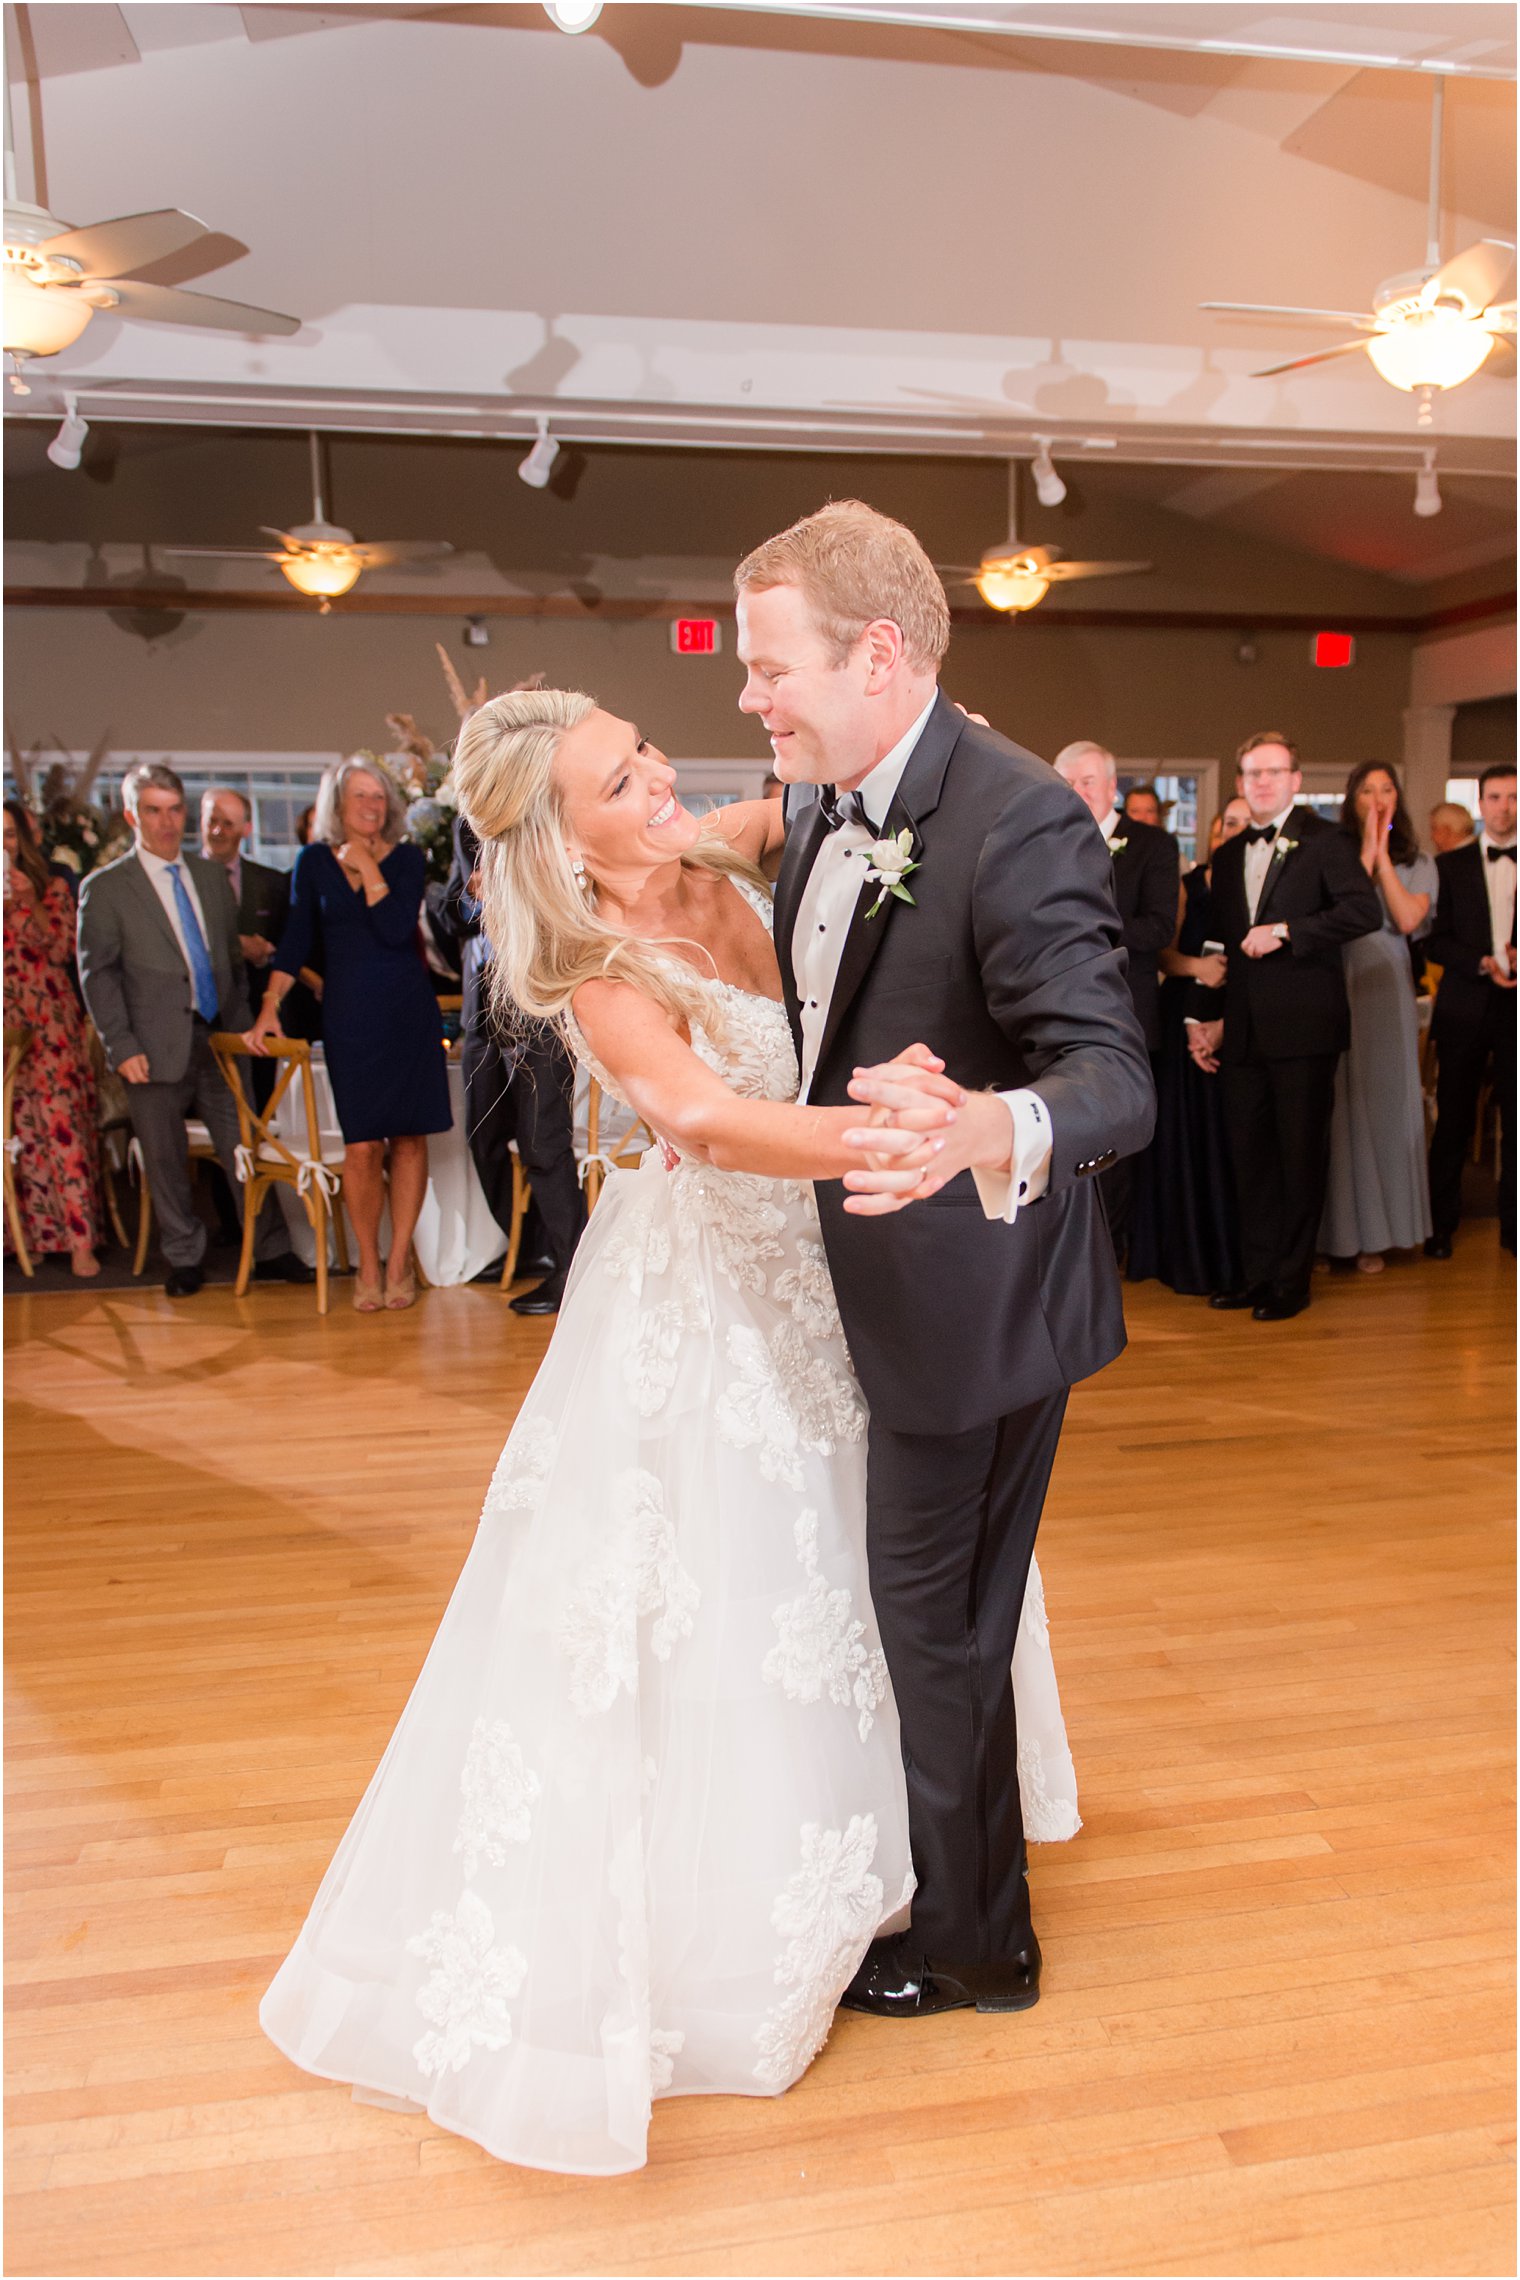 newlyweds dance during wedding reception at Brant Beach Yacht Club